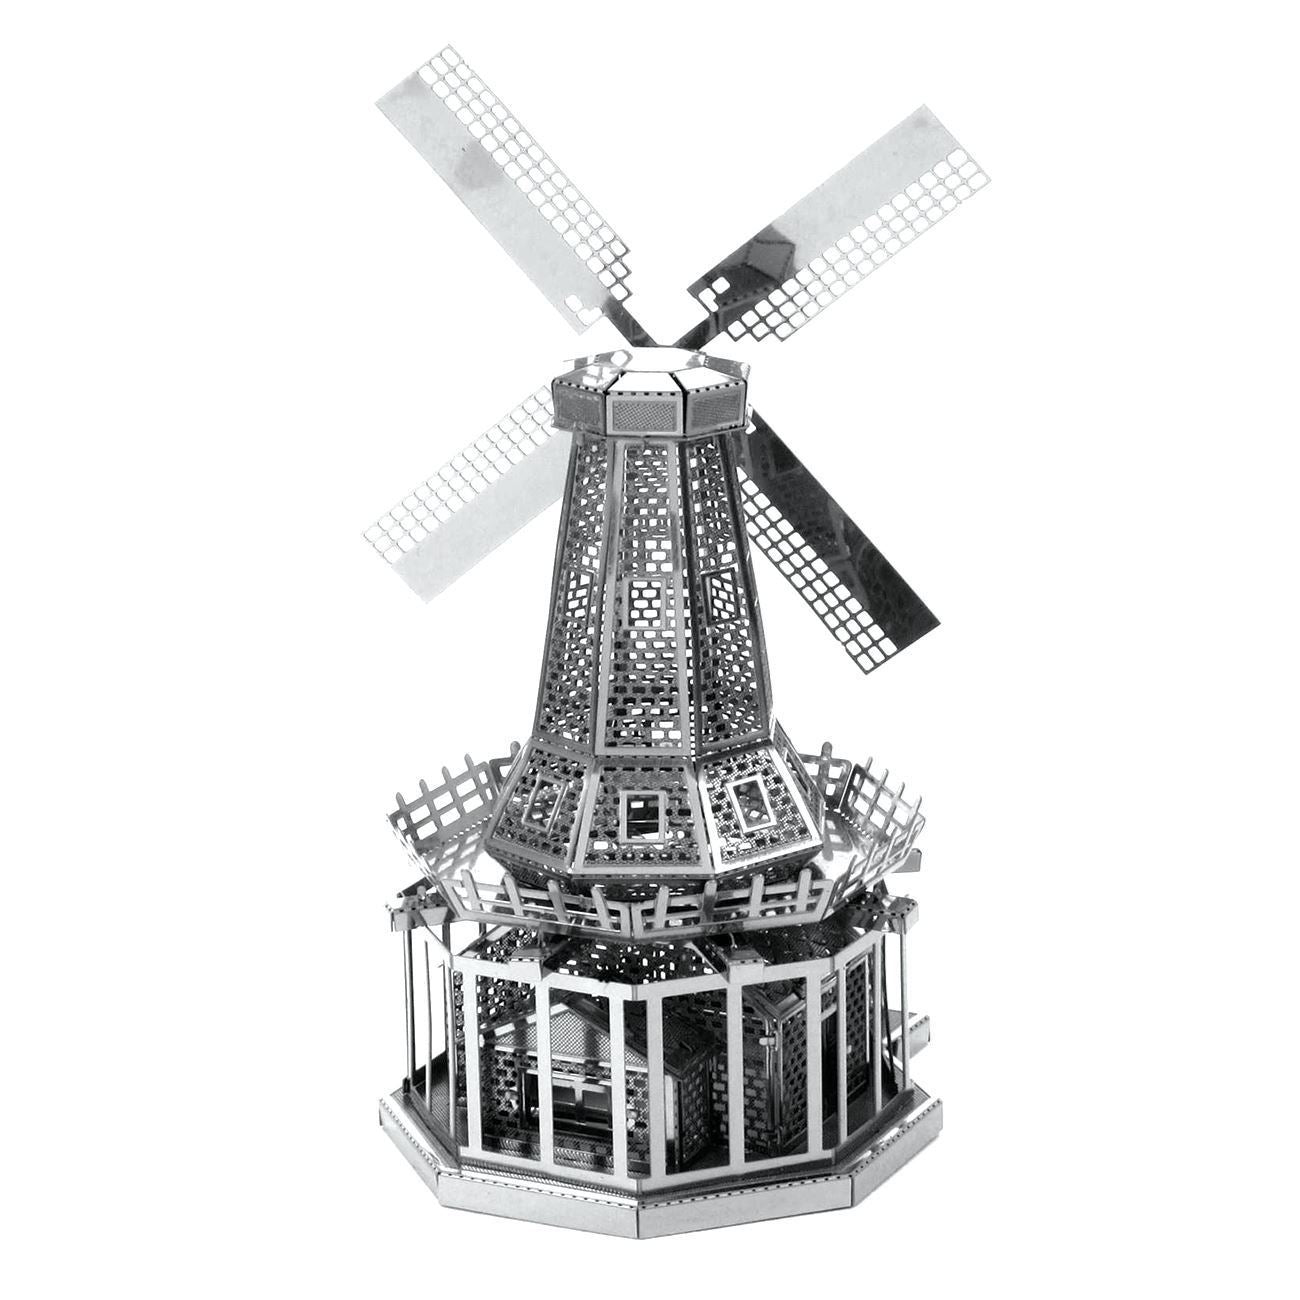 Windmill | Architecture | Metal Earth